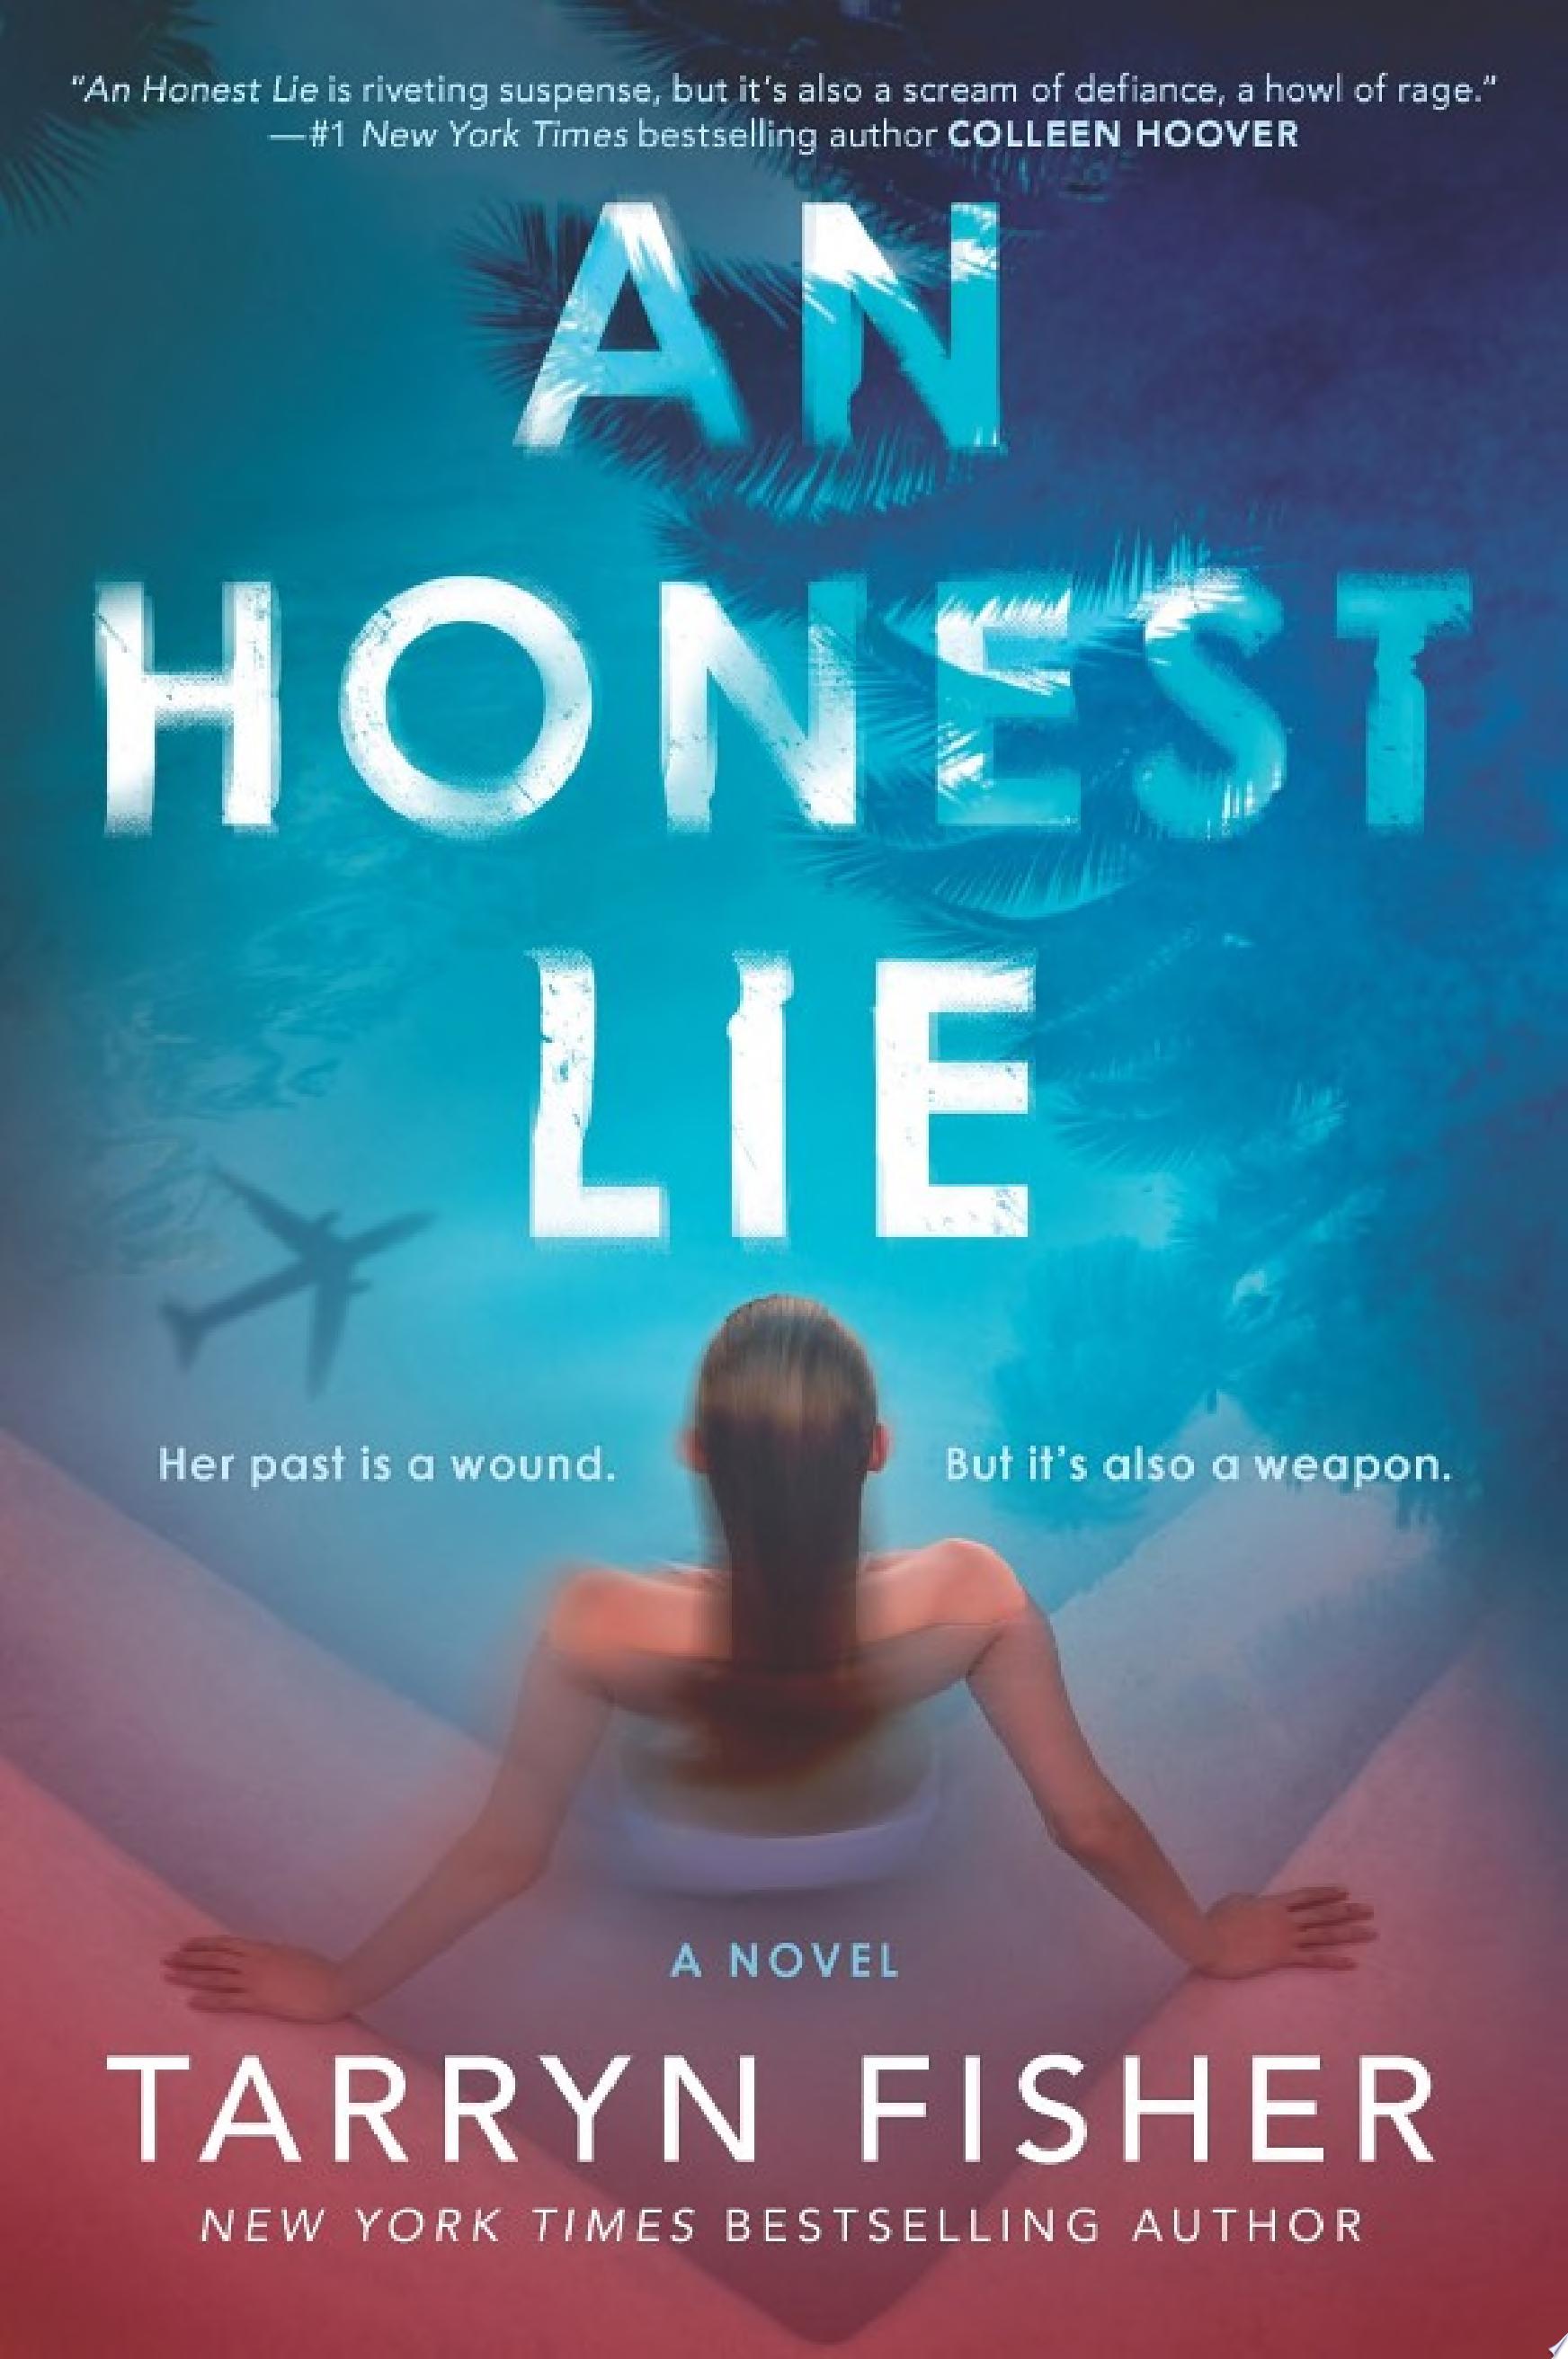 Image for "An Honest Lie"